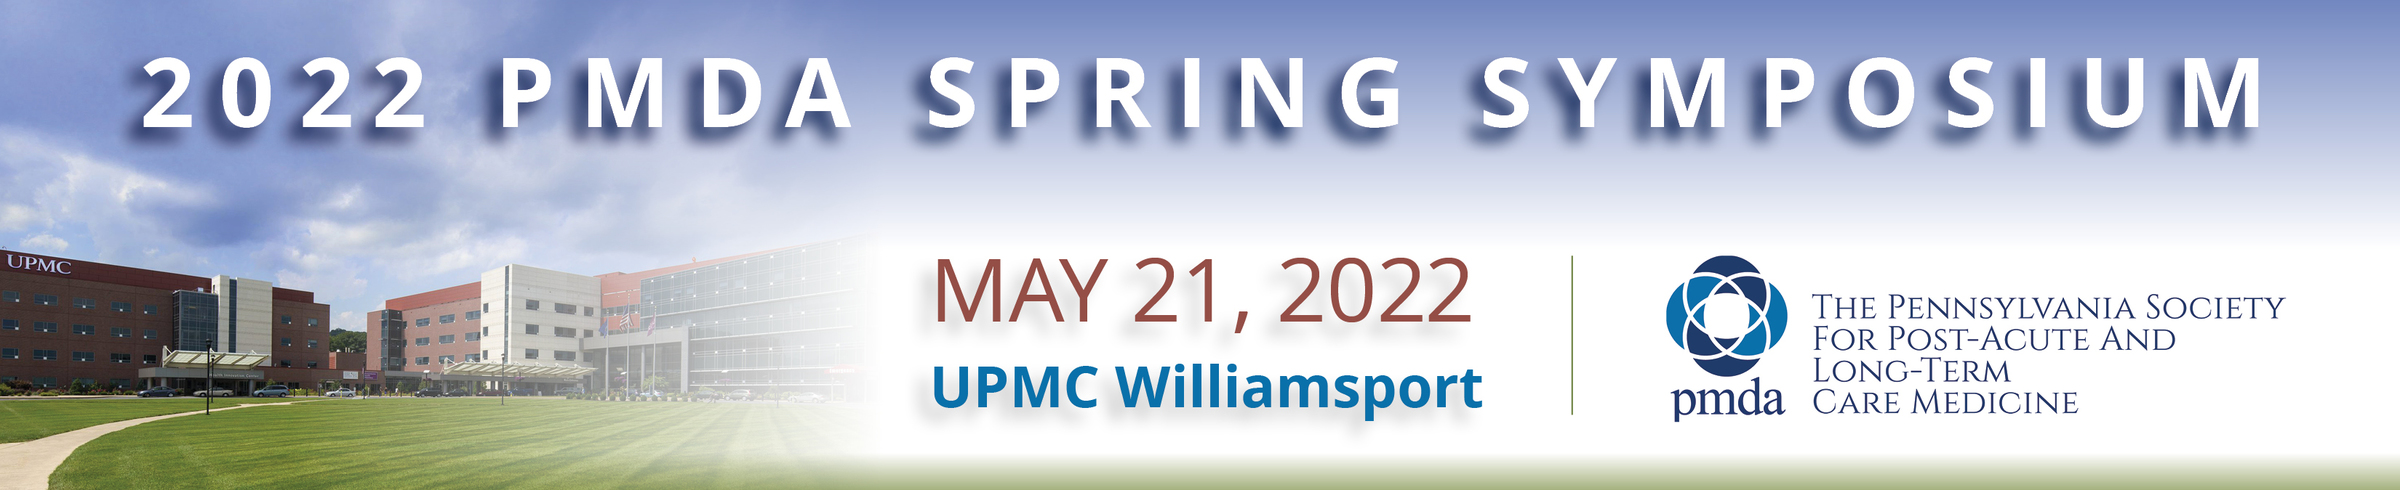 2022 PMDA Spring Symposium